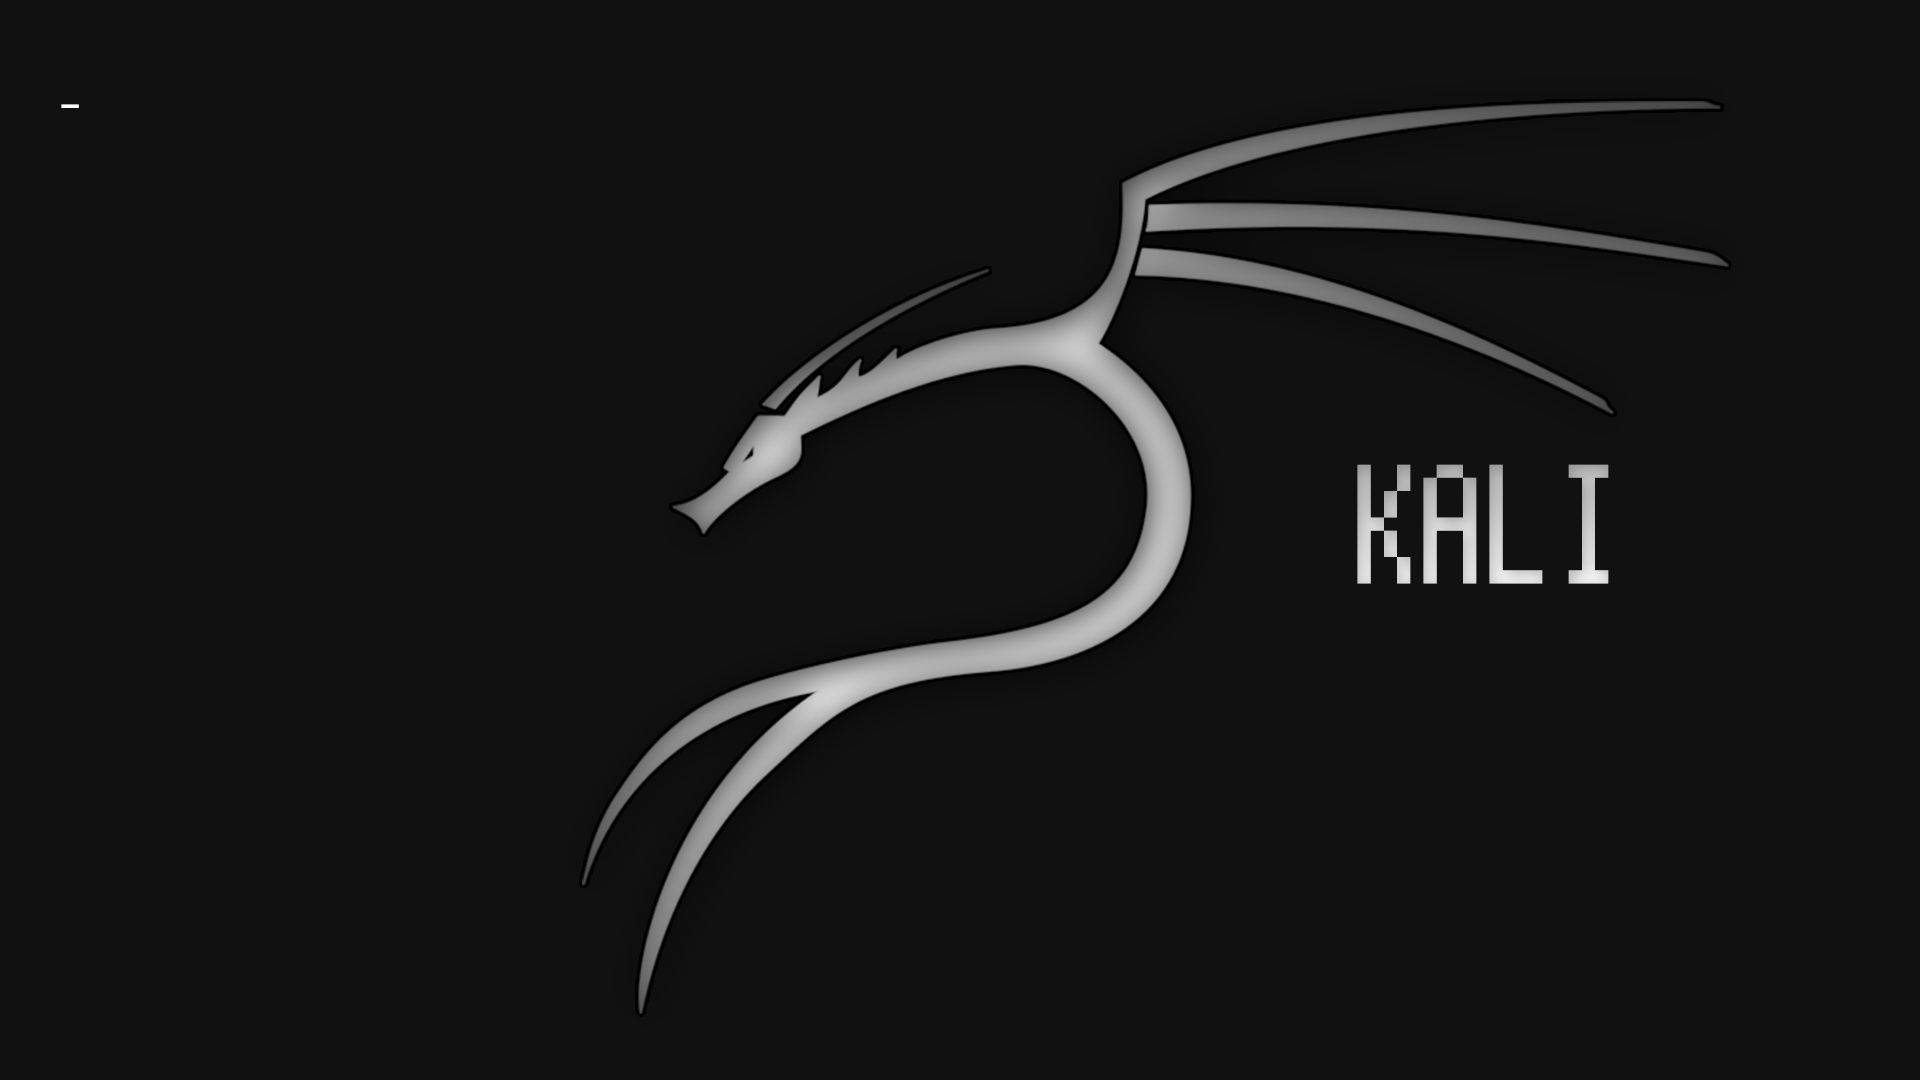 Black & White Kali Linux Background